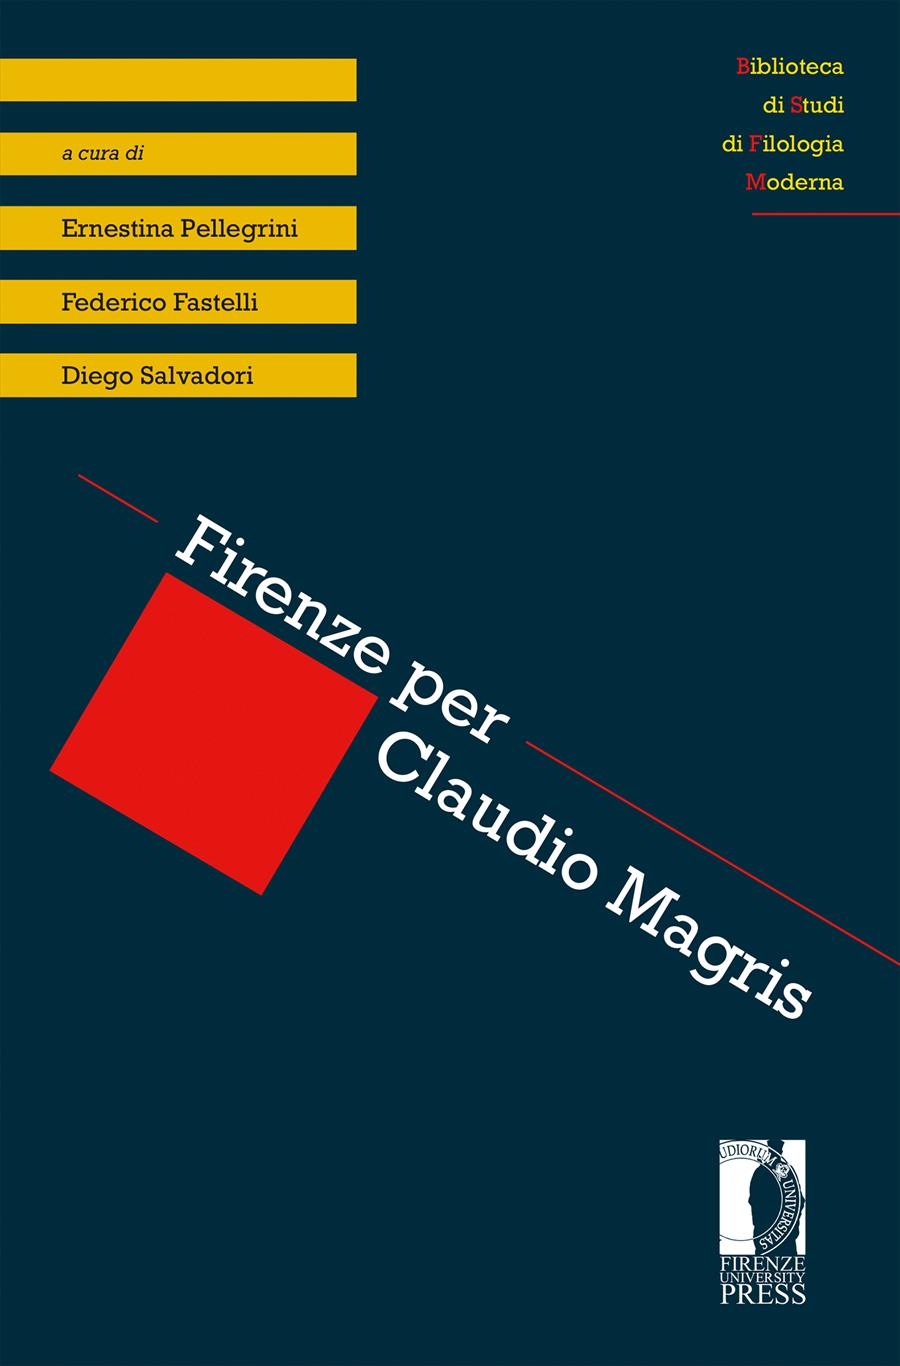 Firenze per Claudio Magris